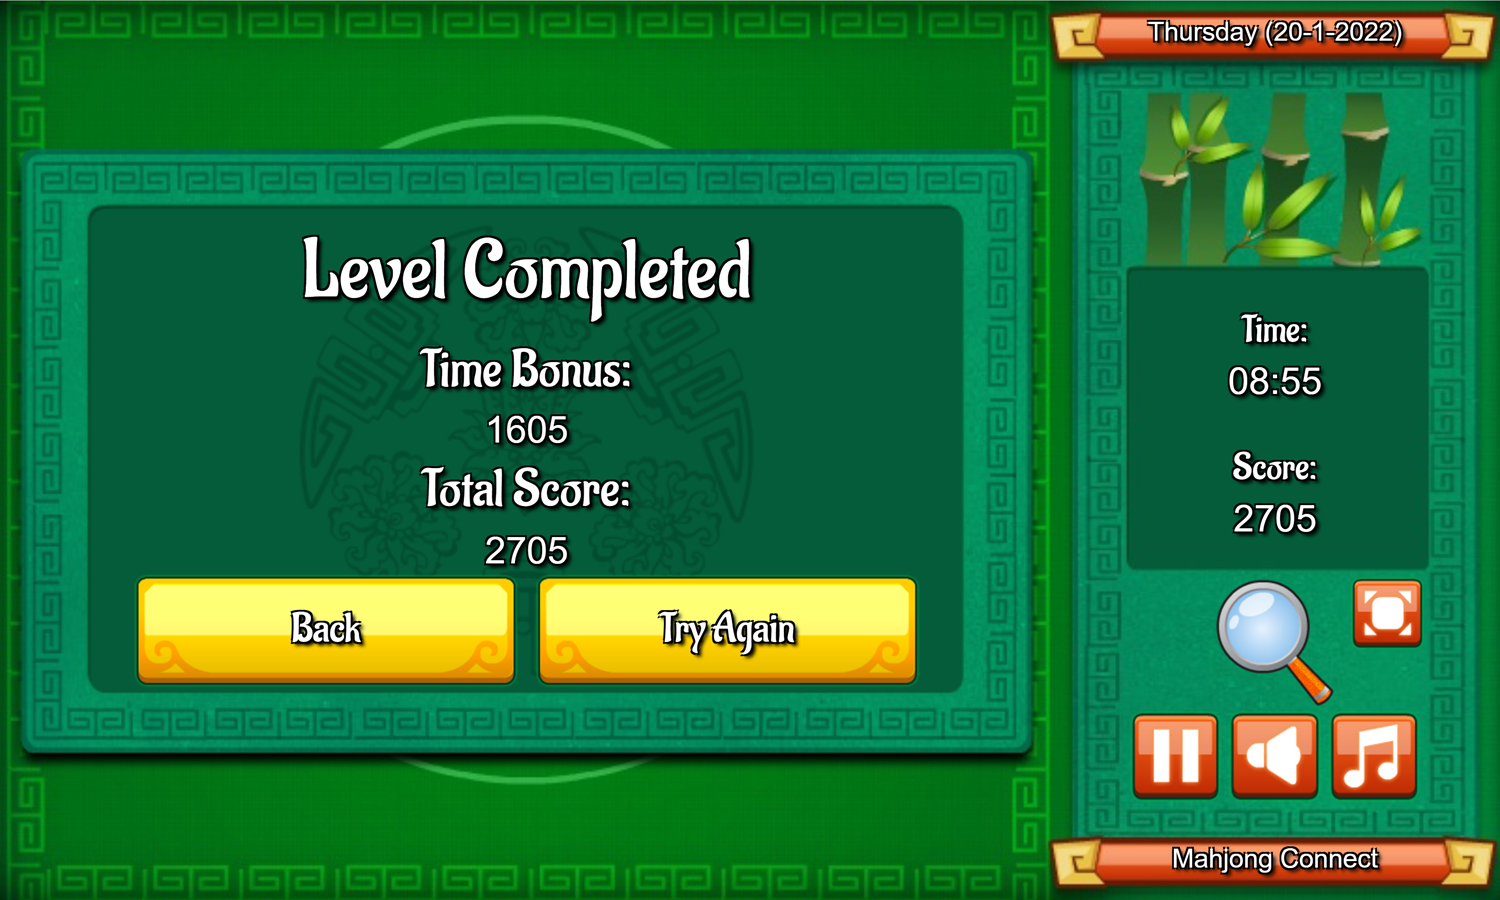 Daily Mahjong Mahjong Connect Level Completed Screen Screenshot.